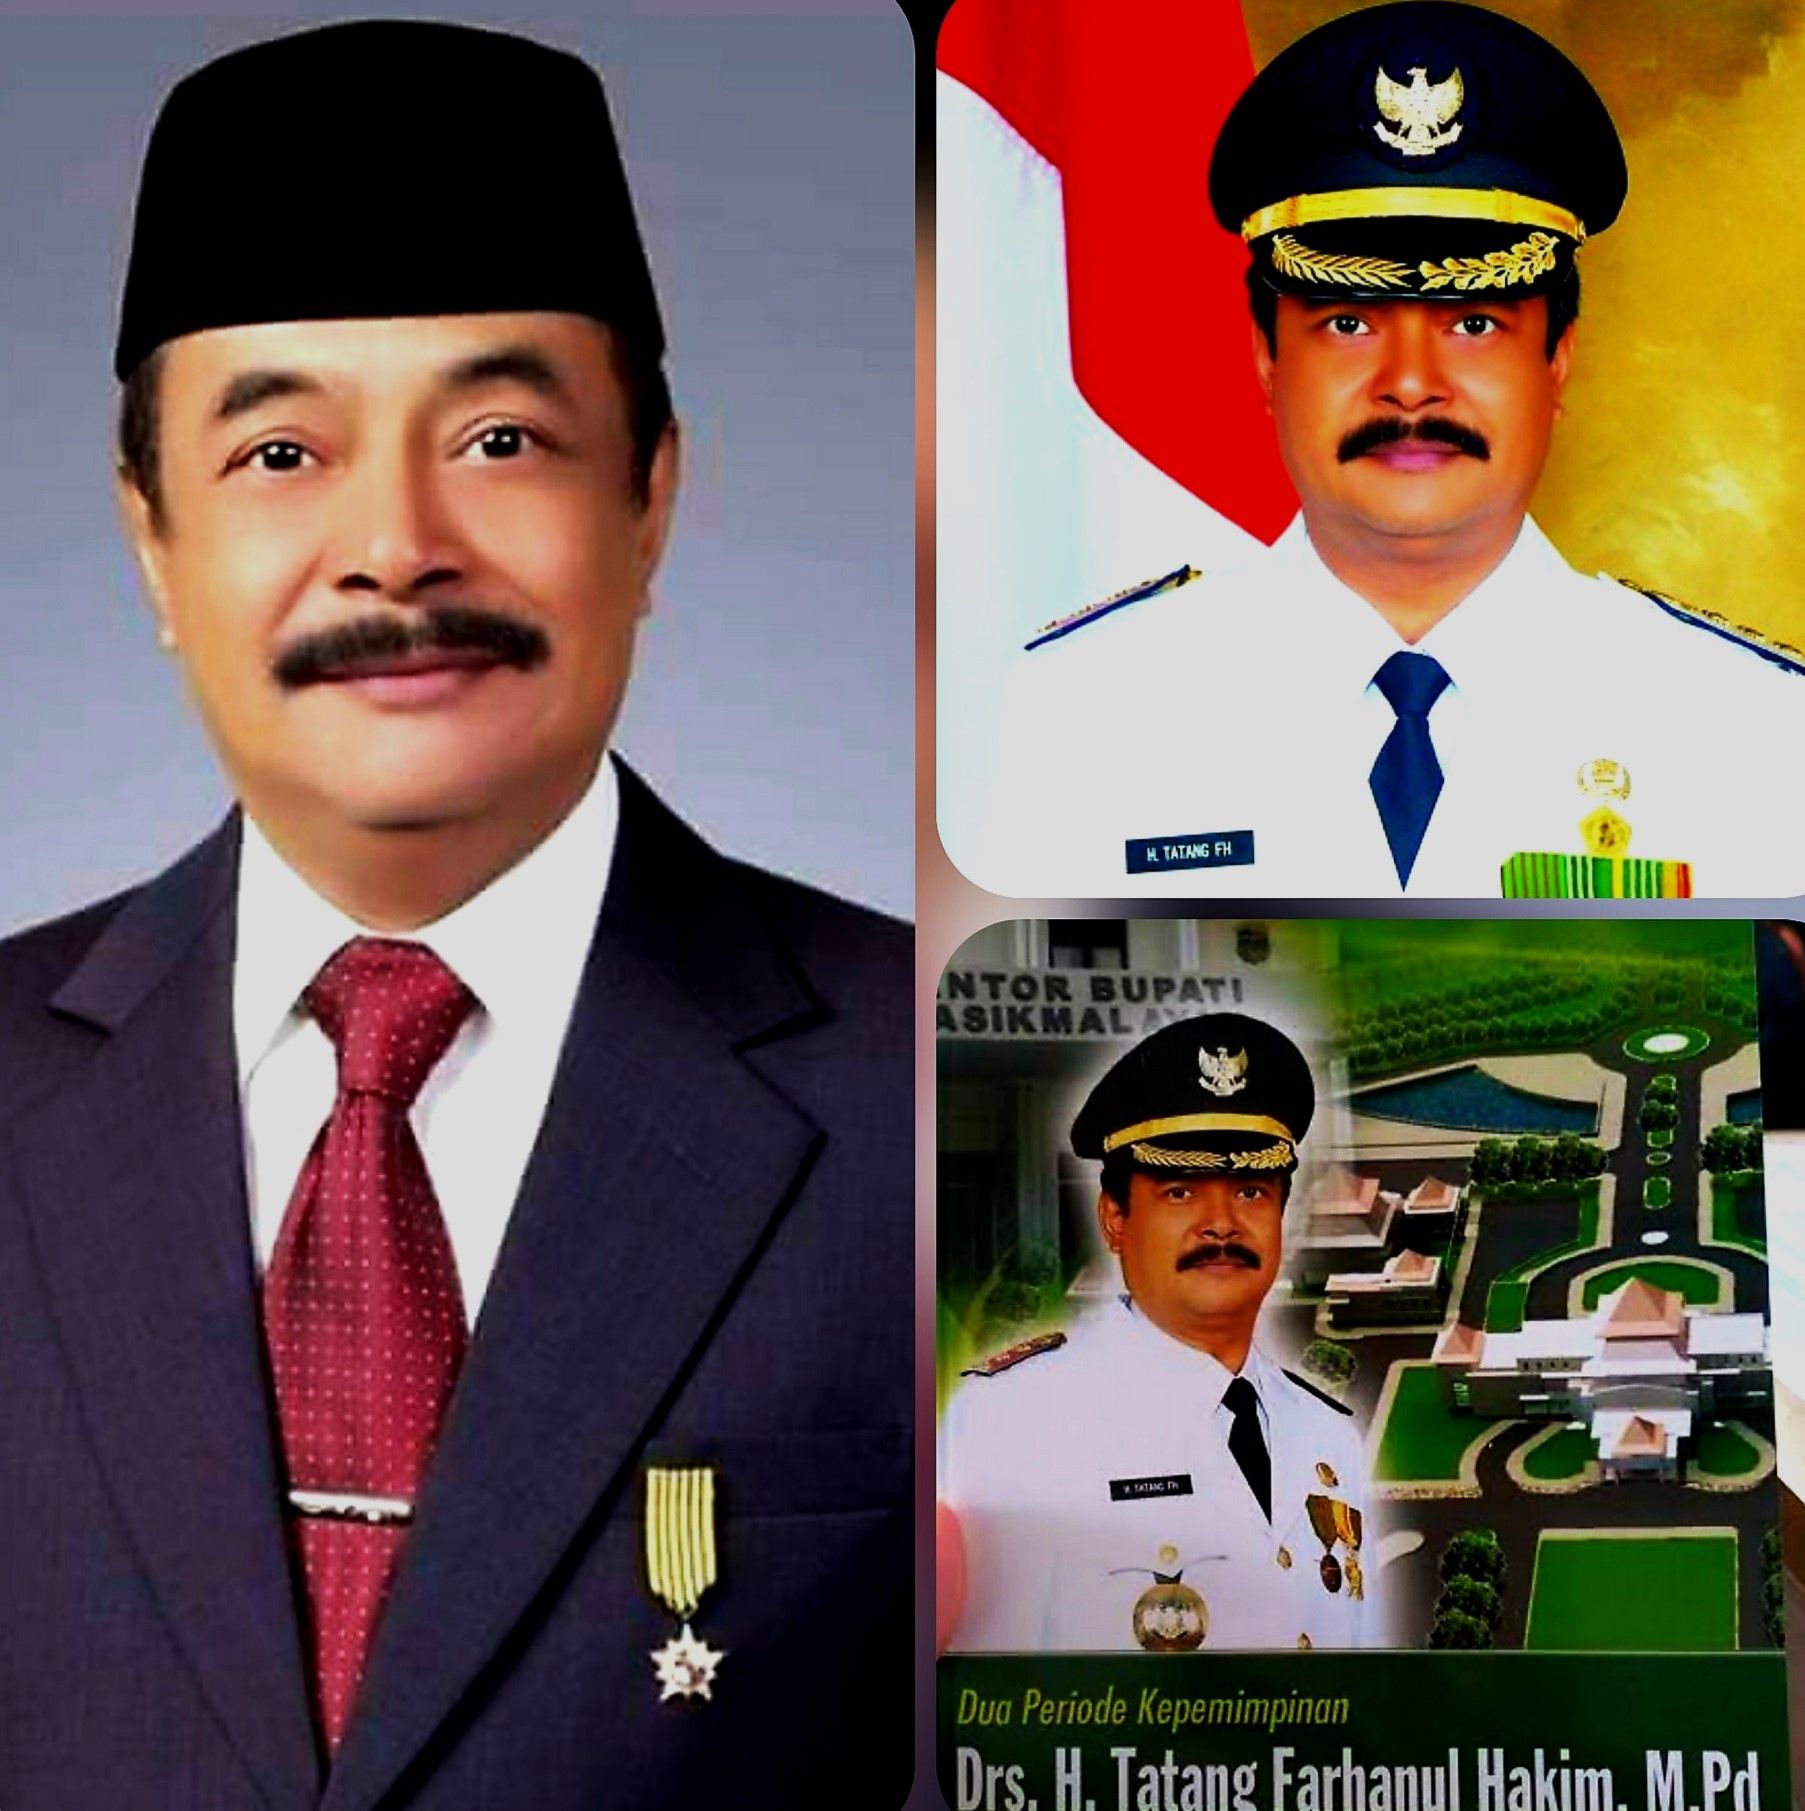 Alm. Drs. H. Tatang Farhanul Hakim M.Pd mantan Bupati Tasikmalaya dua periode.